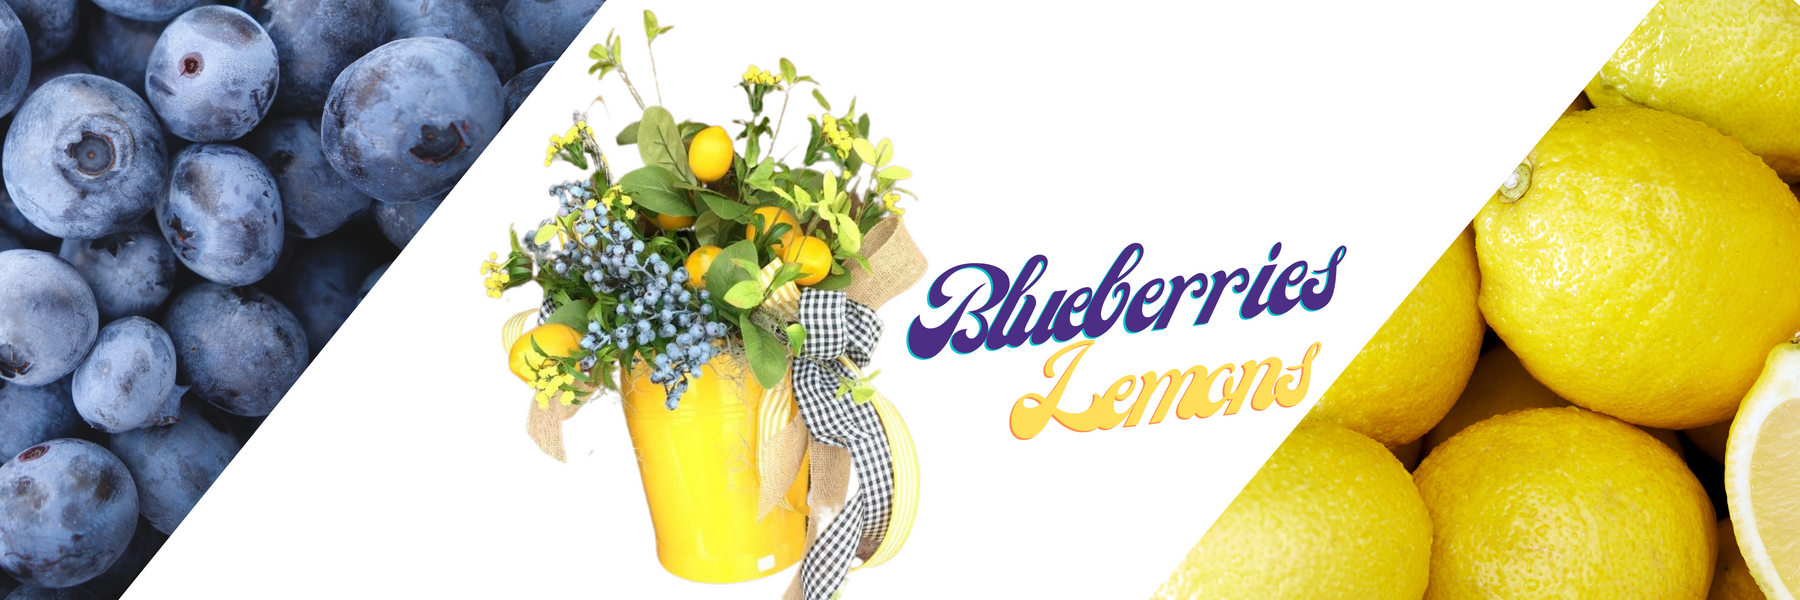 Suggestions for a Blueberries & Lemons Floral Arrangement